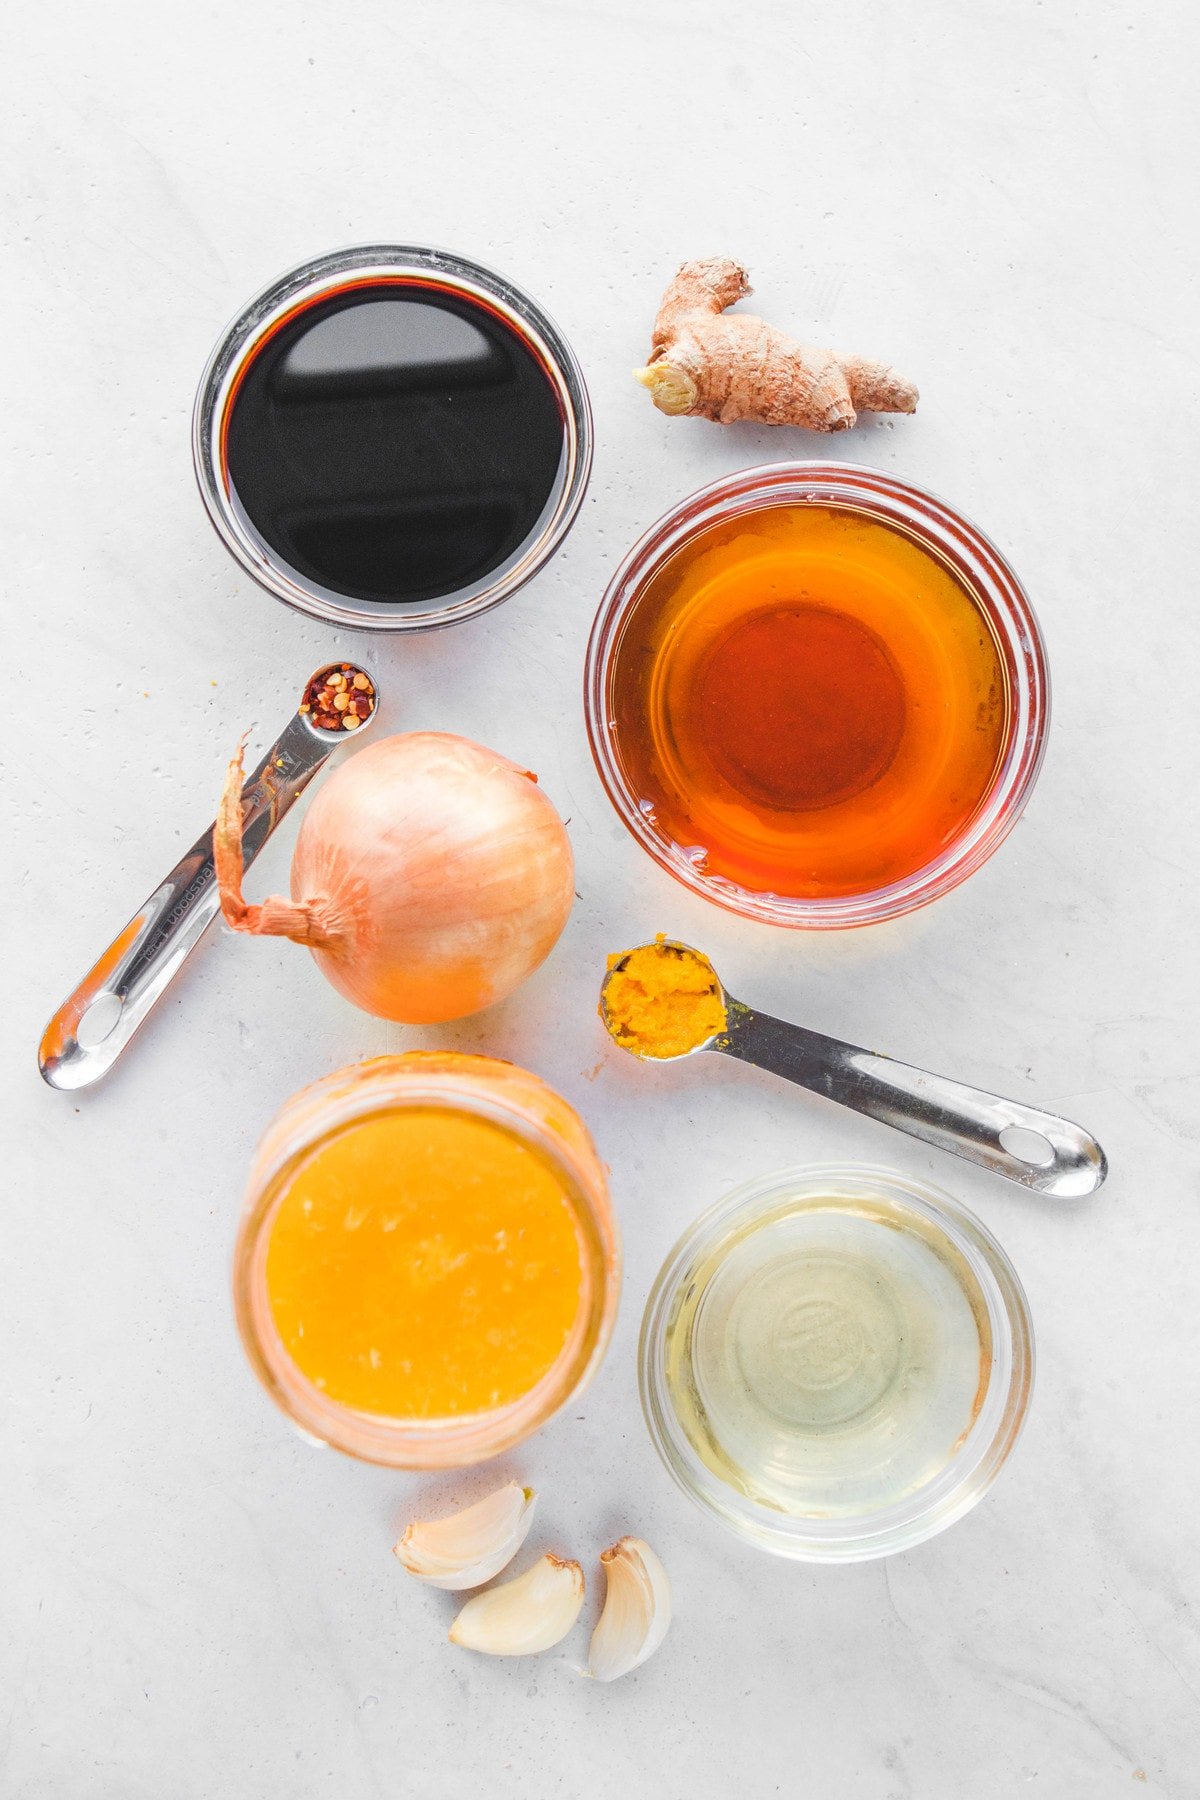 ingredients for orange sauce